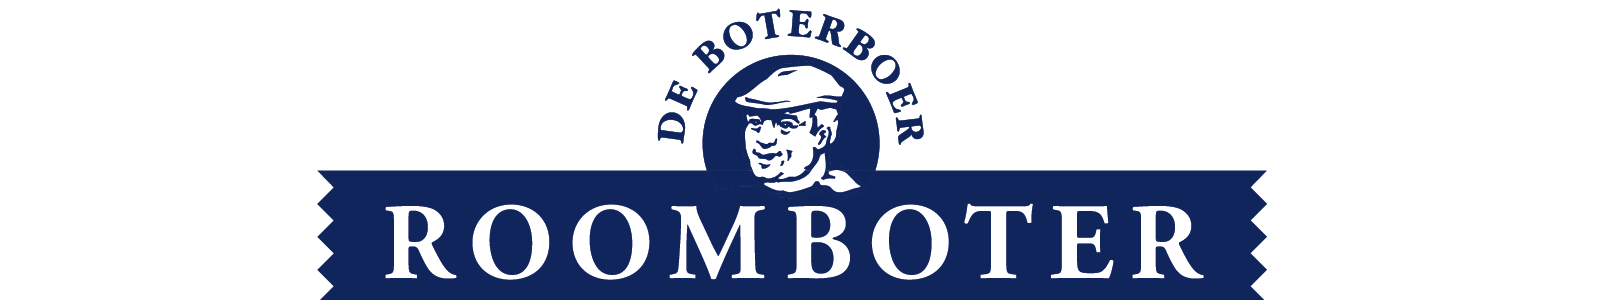 Boterboer banner